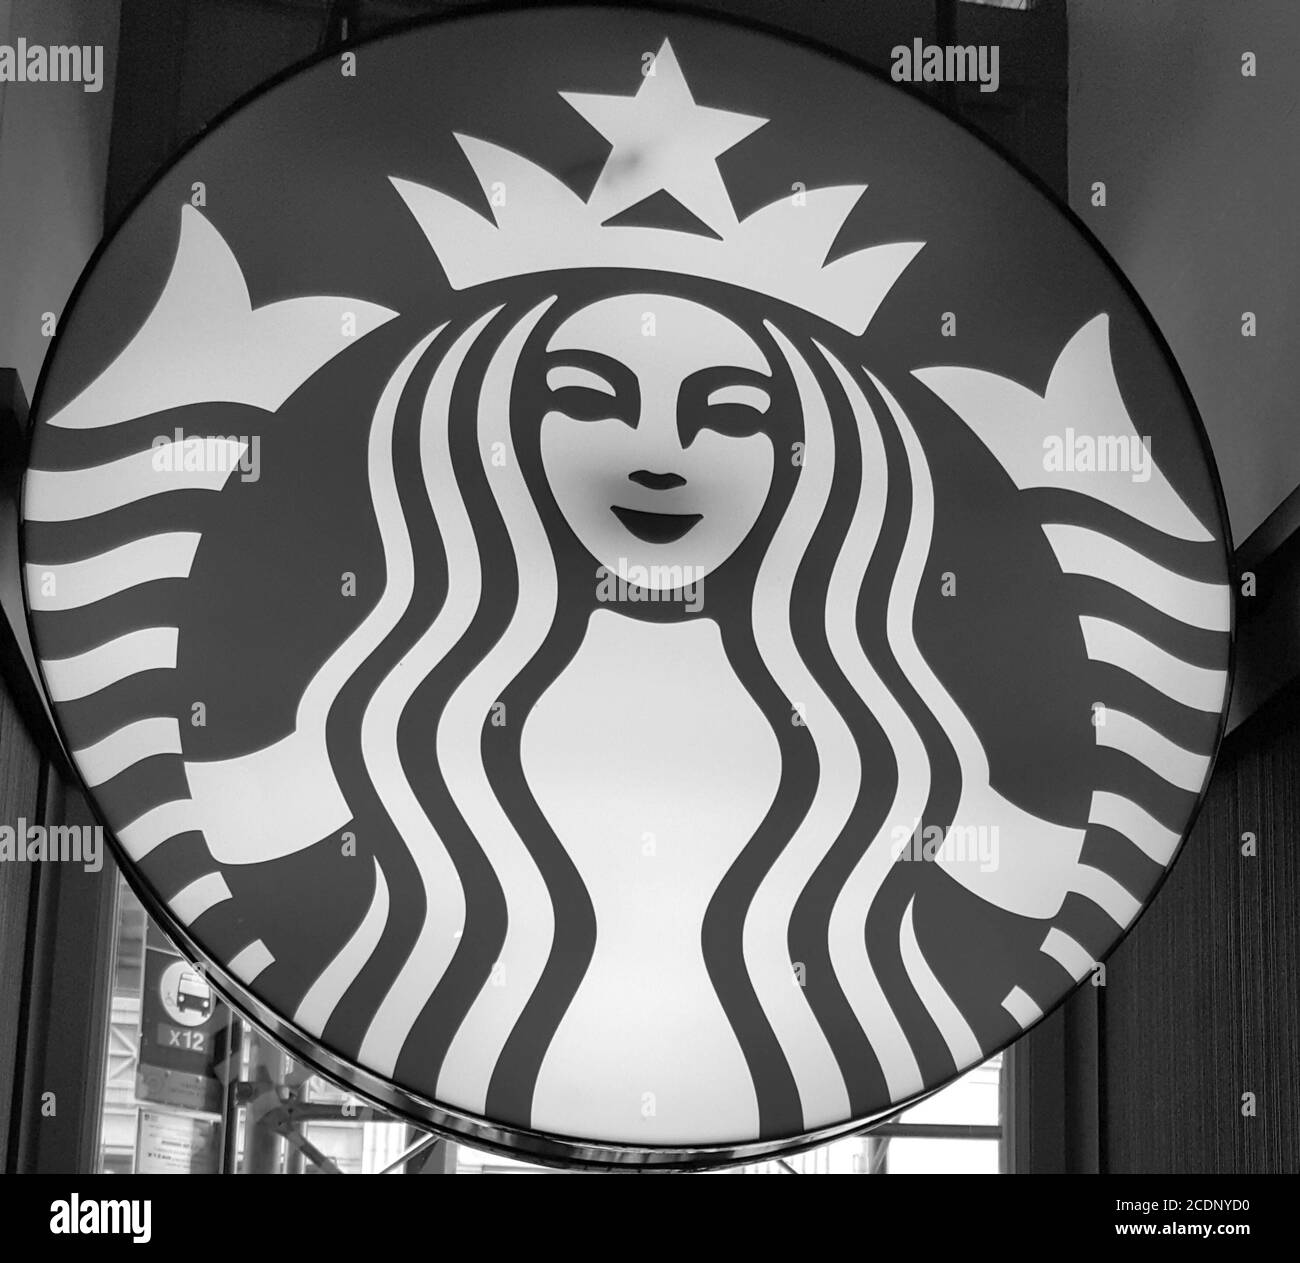 https://c8.alamy.com/comp/2CDNYD0/starbucks-coffee-logo-black-and-white-image-new-york-city-united-states-2CDNYD0.jpg